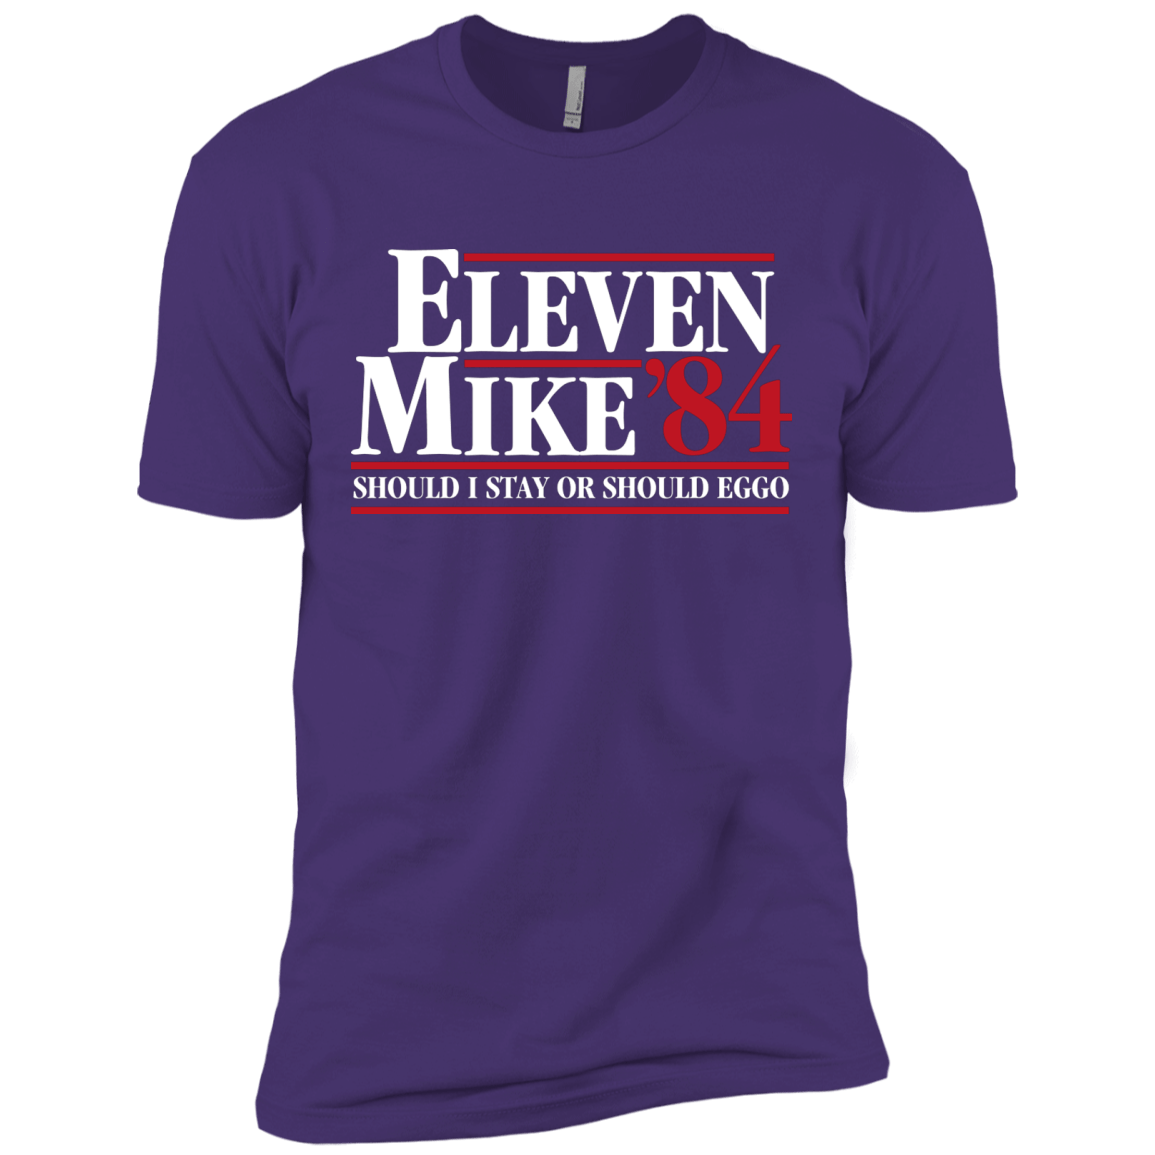 T-Shirts Purple / X-Small Eleven Mike 84 - Should I Stay or Should Eggo Men's Premium T-Shirt